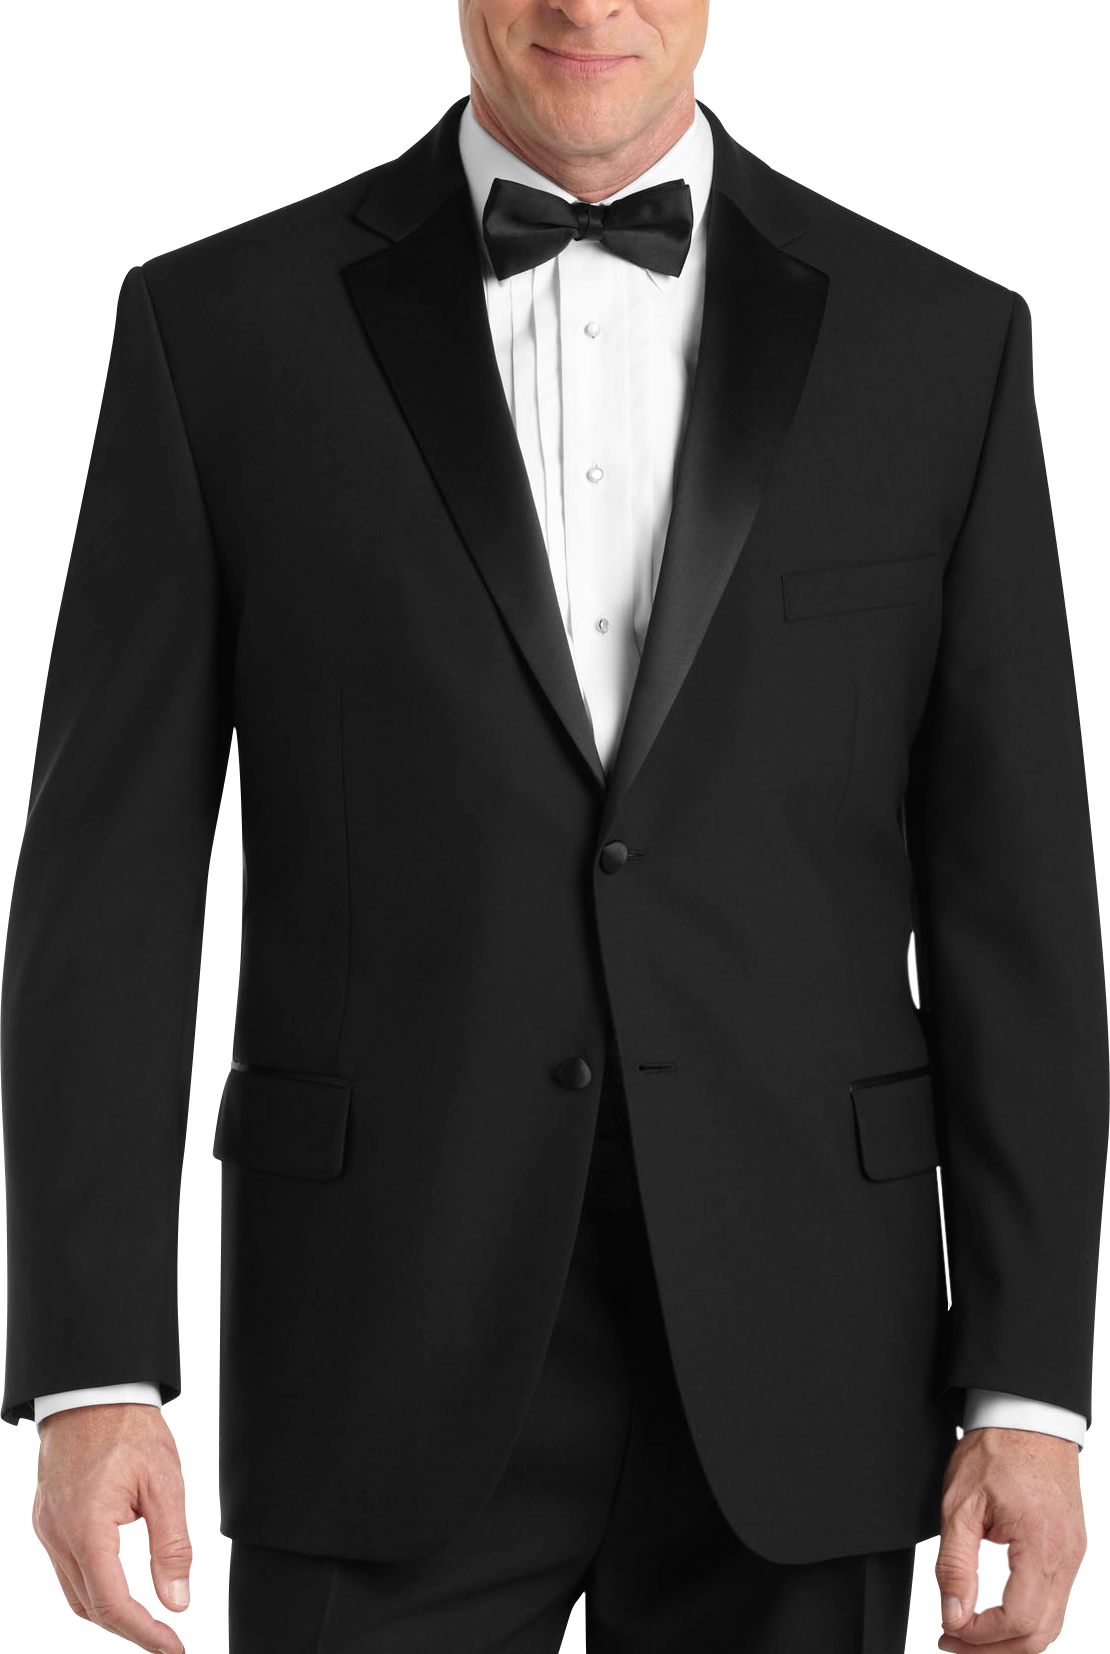 Men's Tuxedo & Black Tie Tuxes | Men's Wearhouse